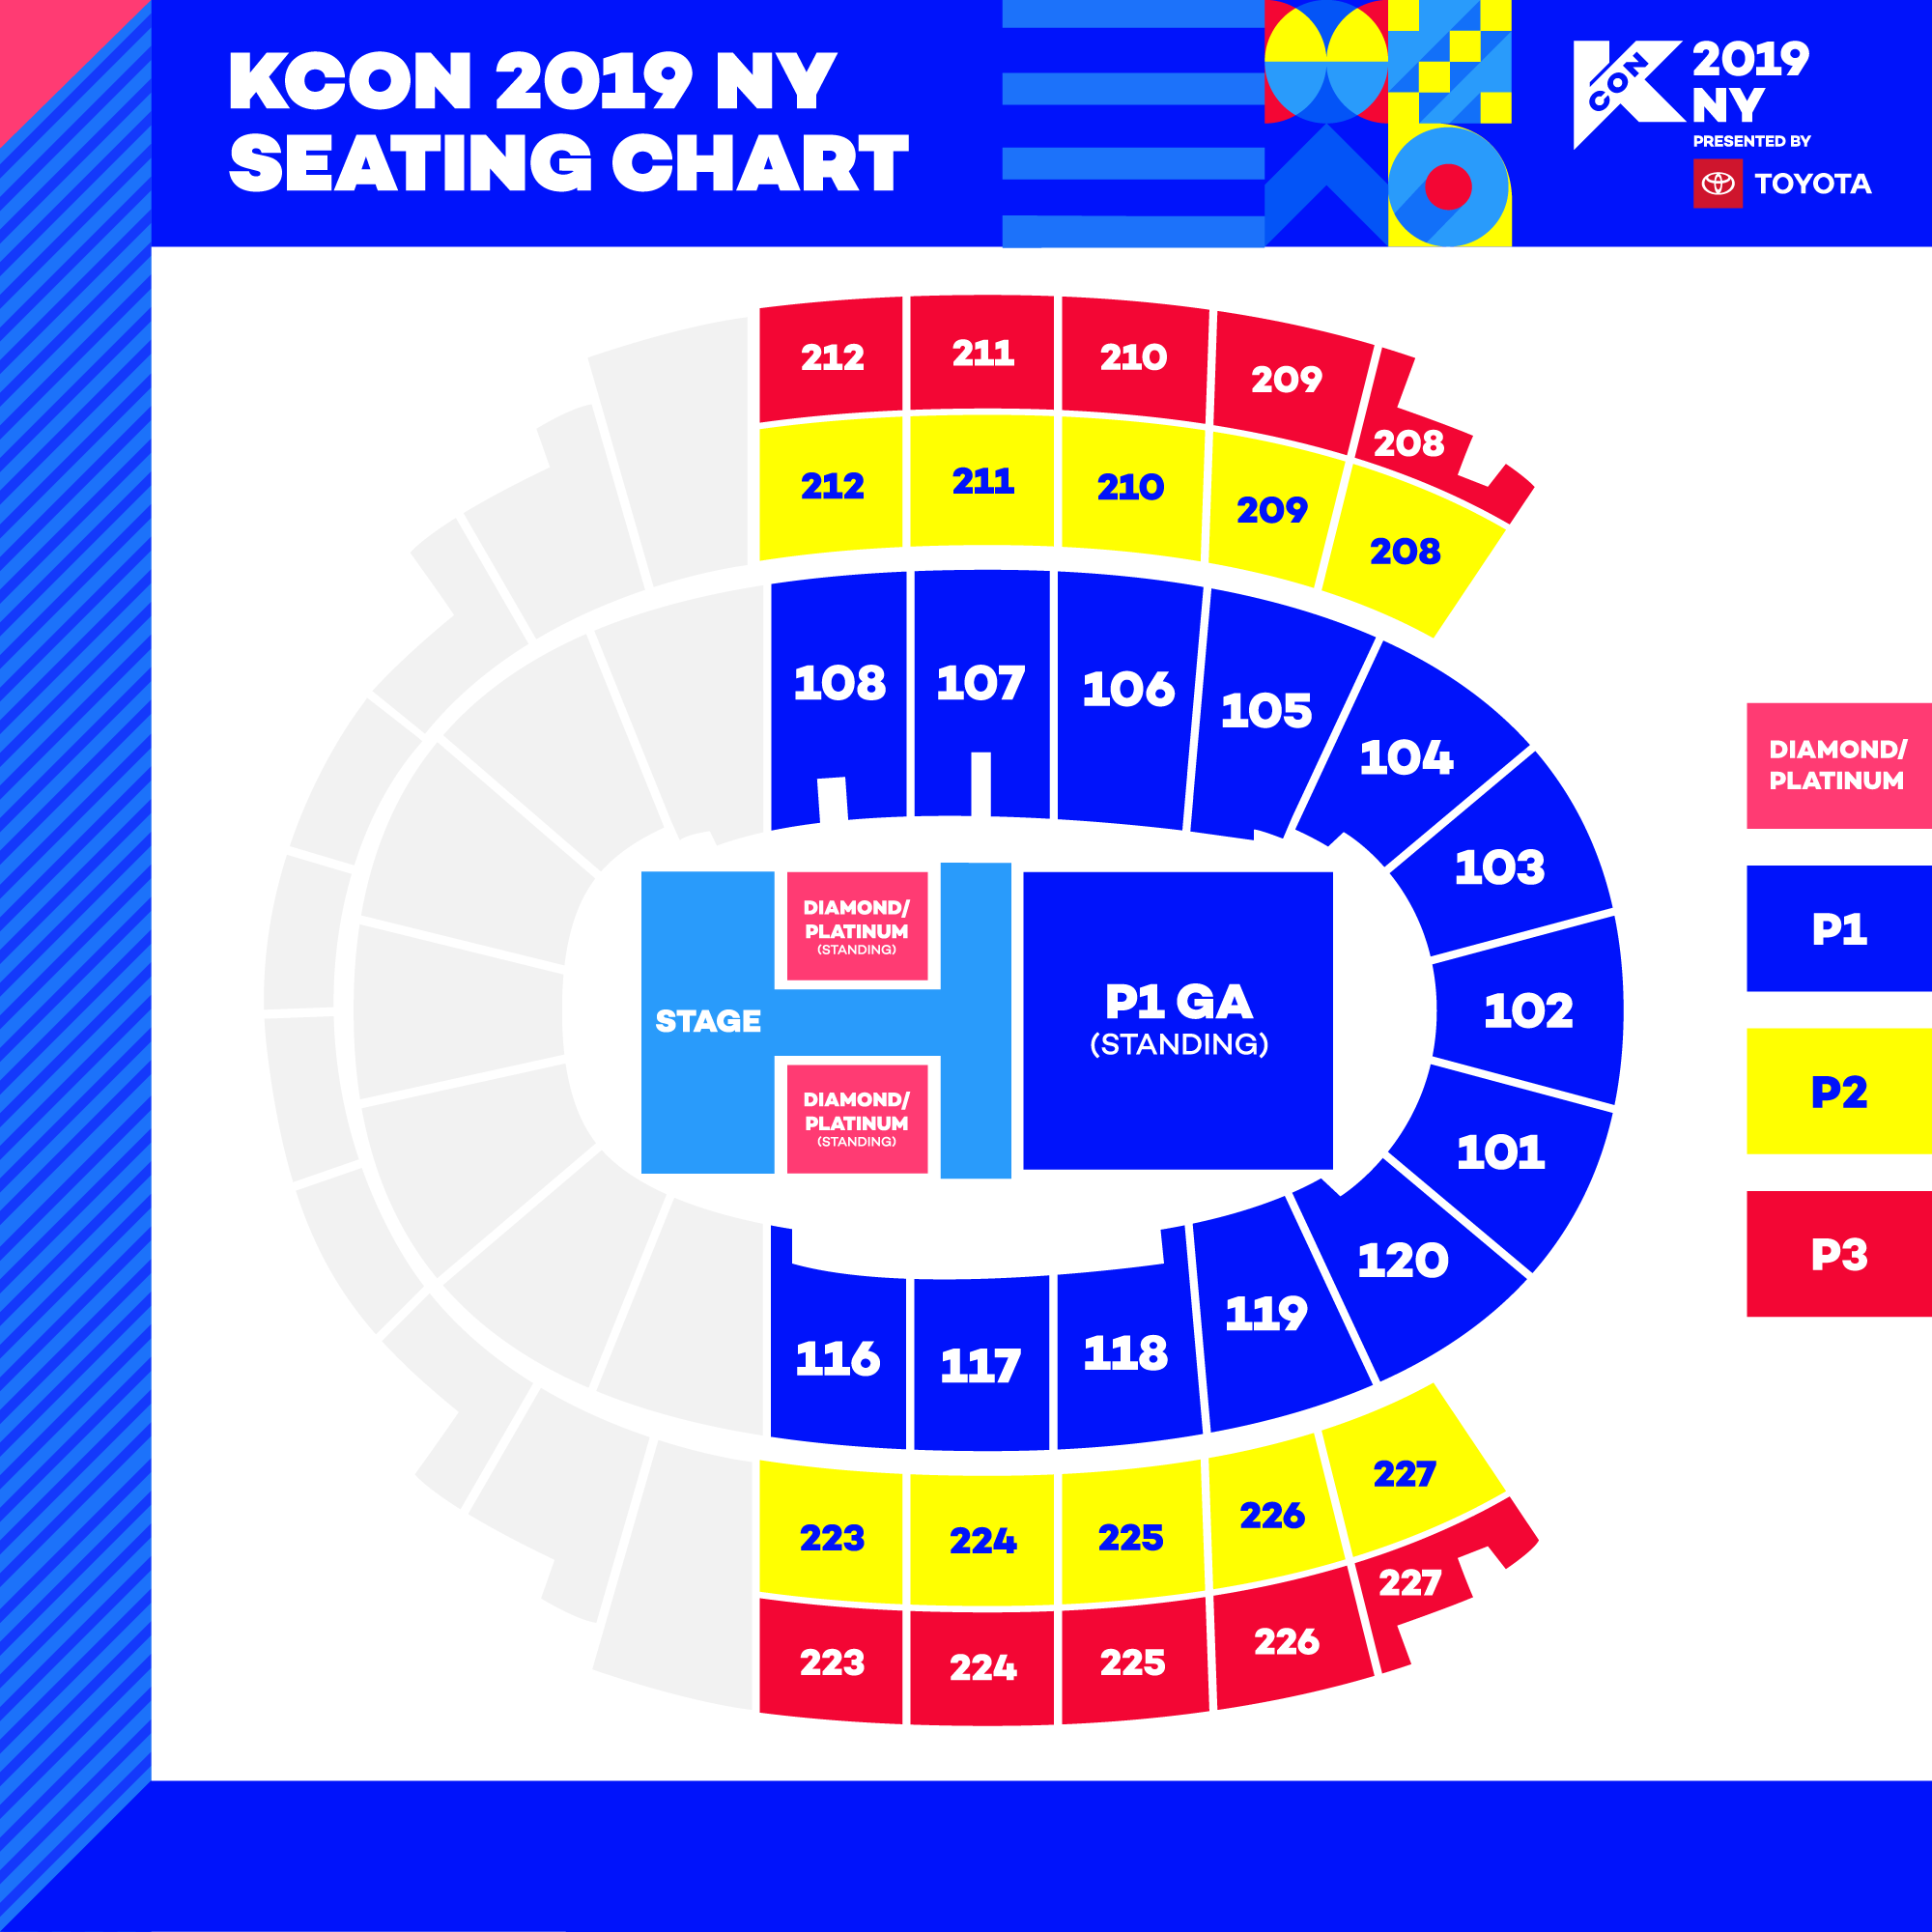 Kcon La 2017 Seating Chart